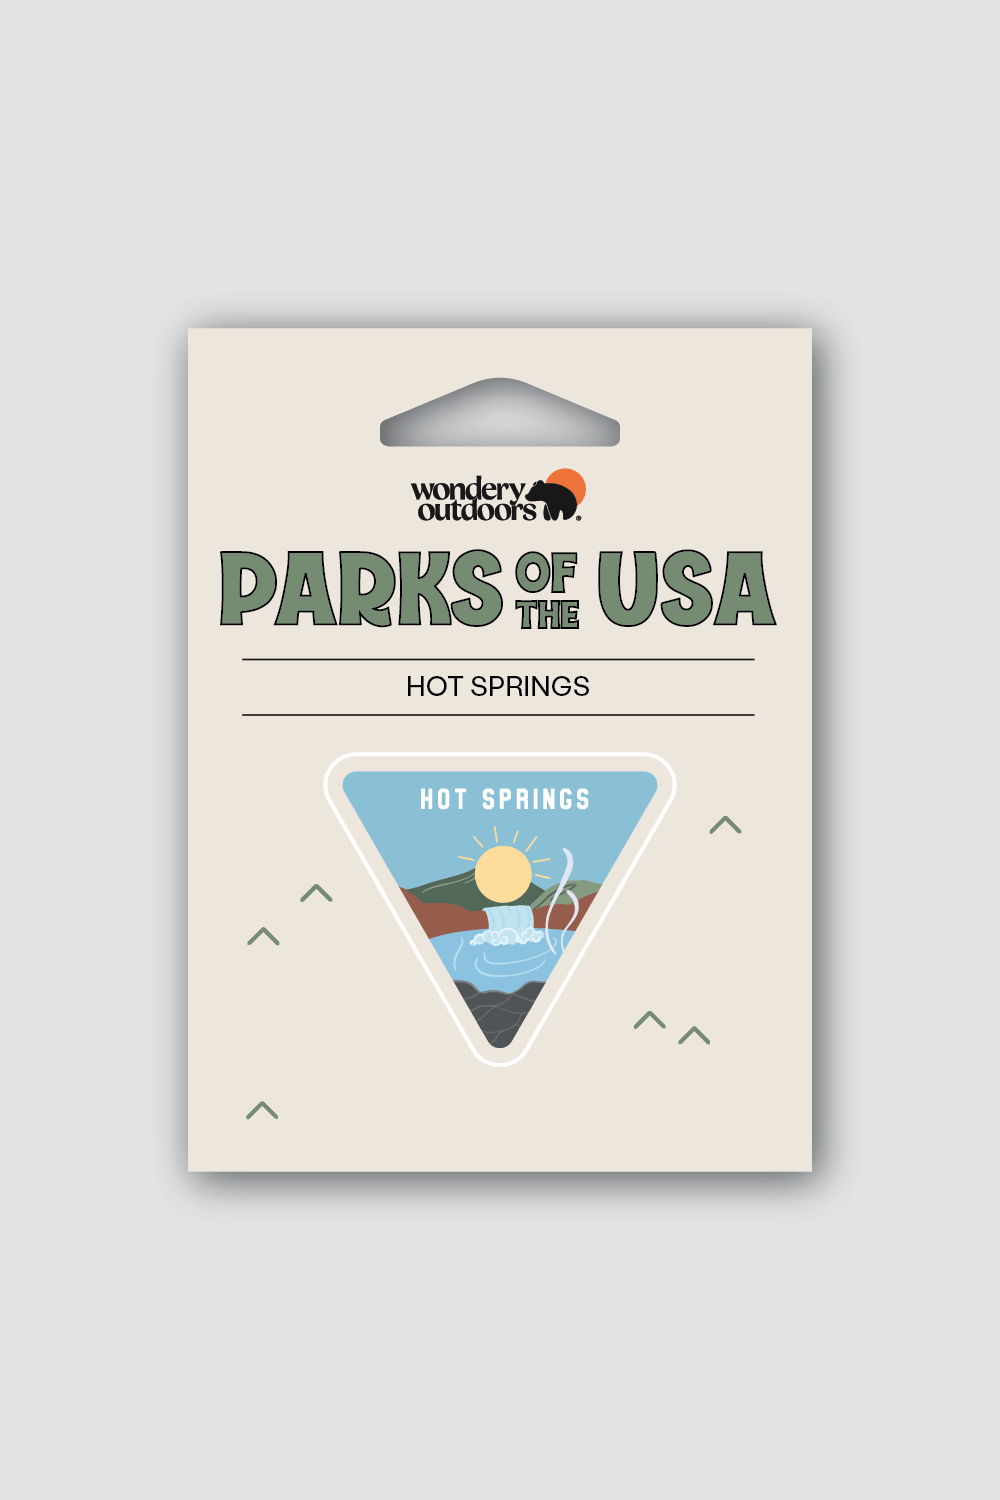 #national park_hot springs _USA National Parks souvenir sticker gift sets